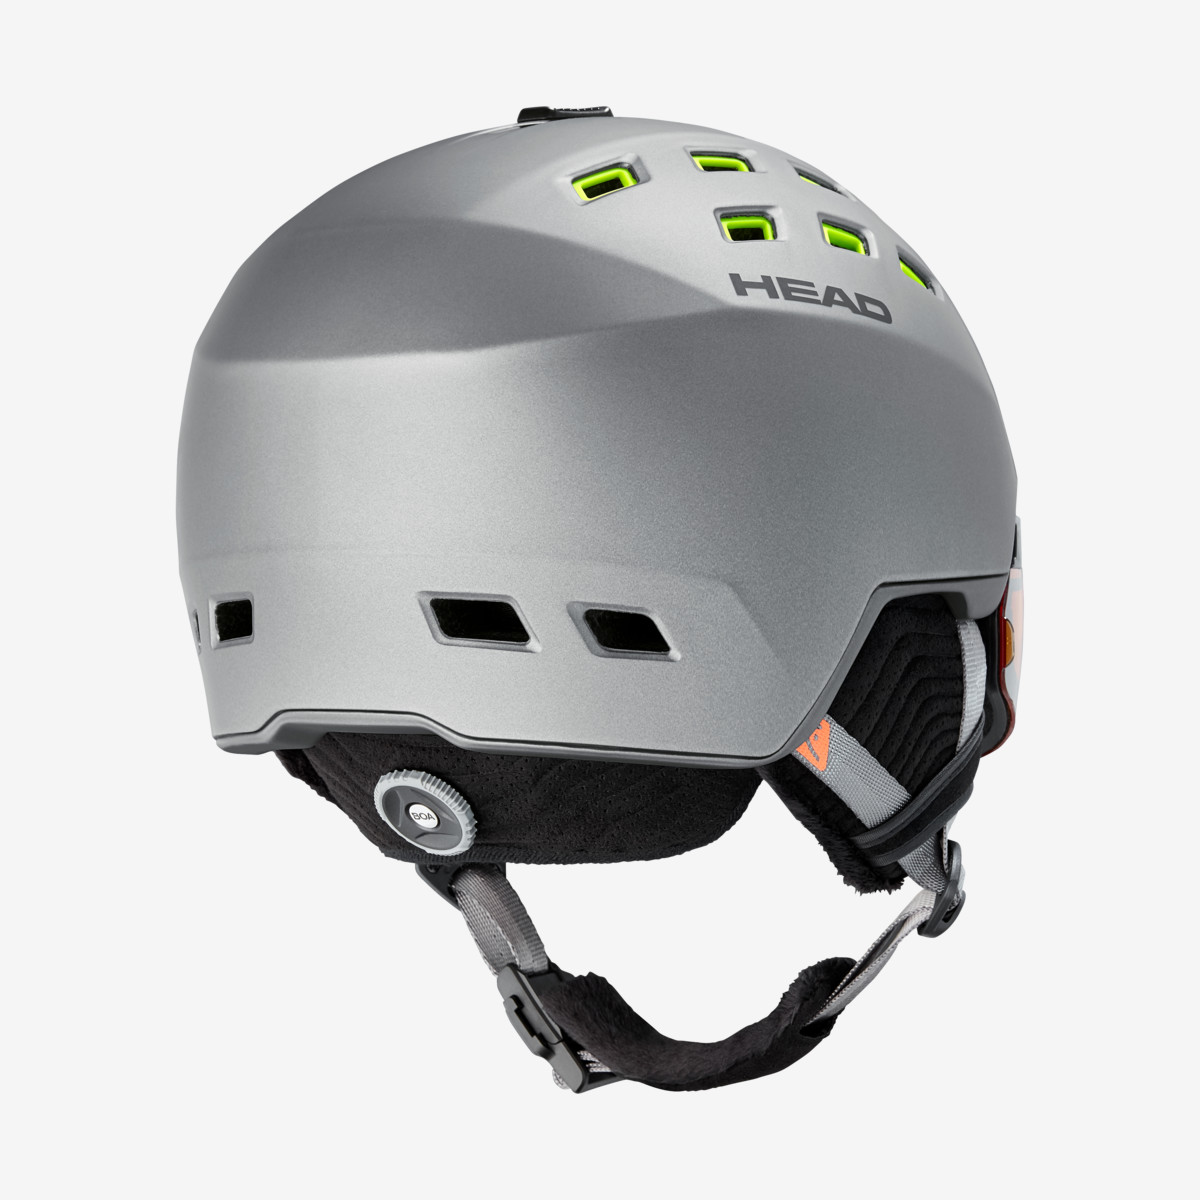 Ski Visor Helmet, Head RADAR VISOR SKI HELMET